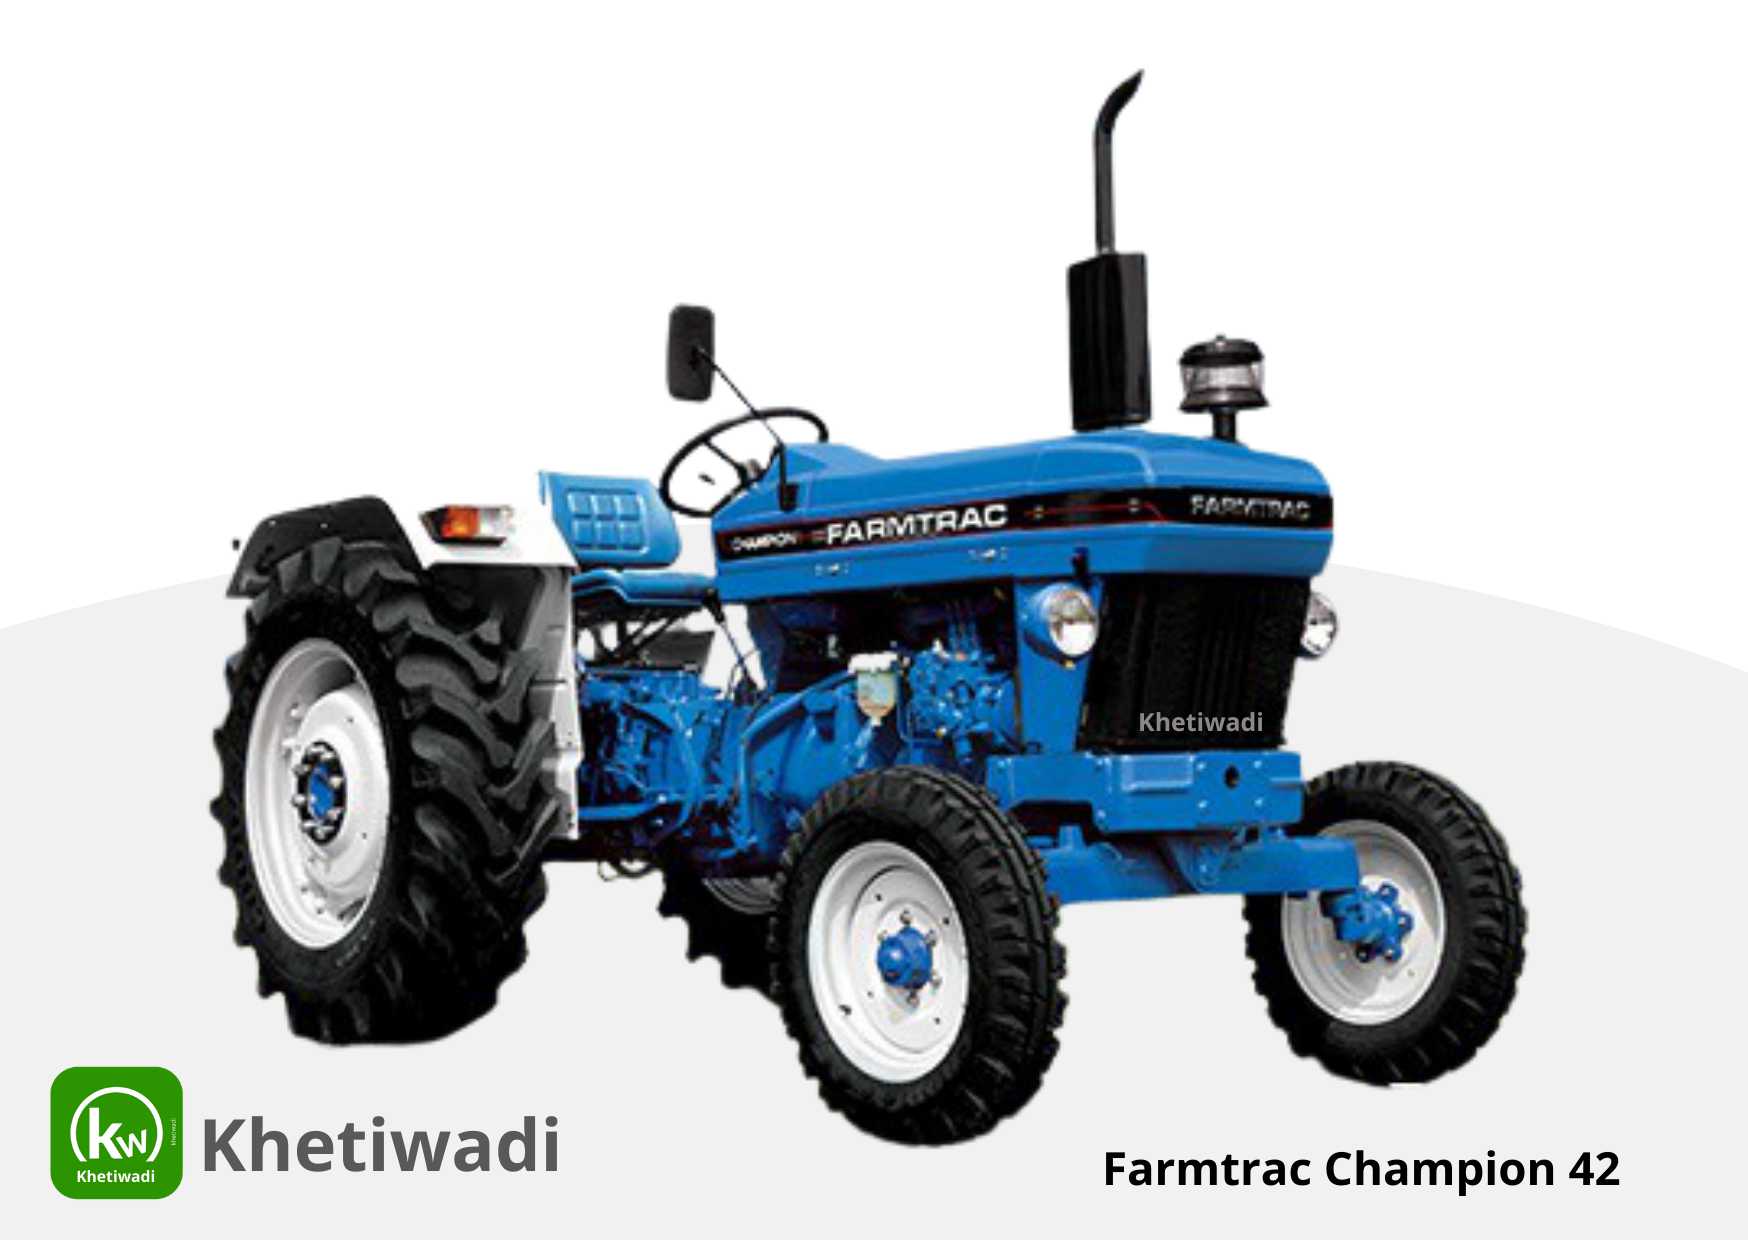 E27N-994609 45 A New Bushing for a Farmtrac 35 50 60 435 535 Tractor 55